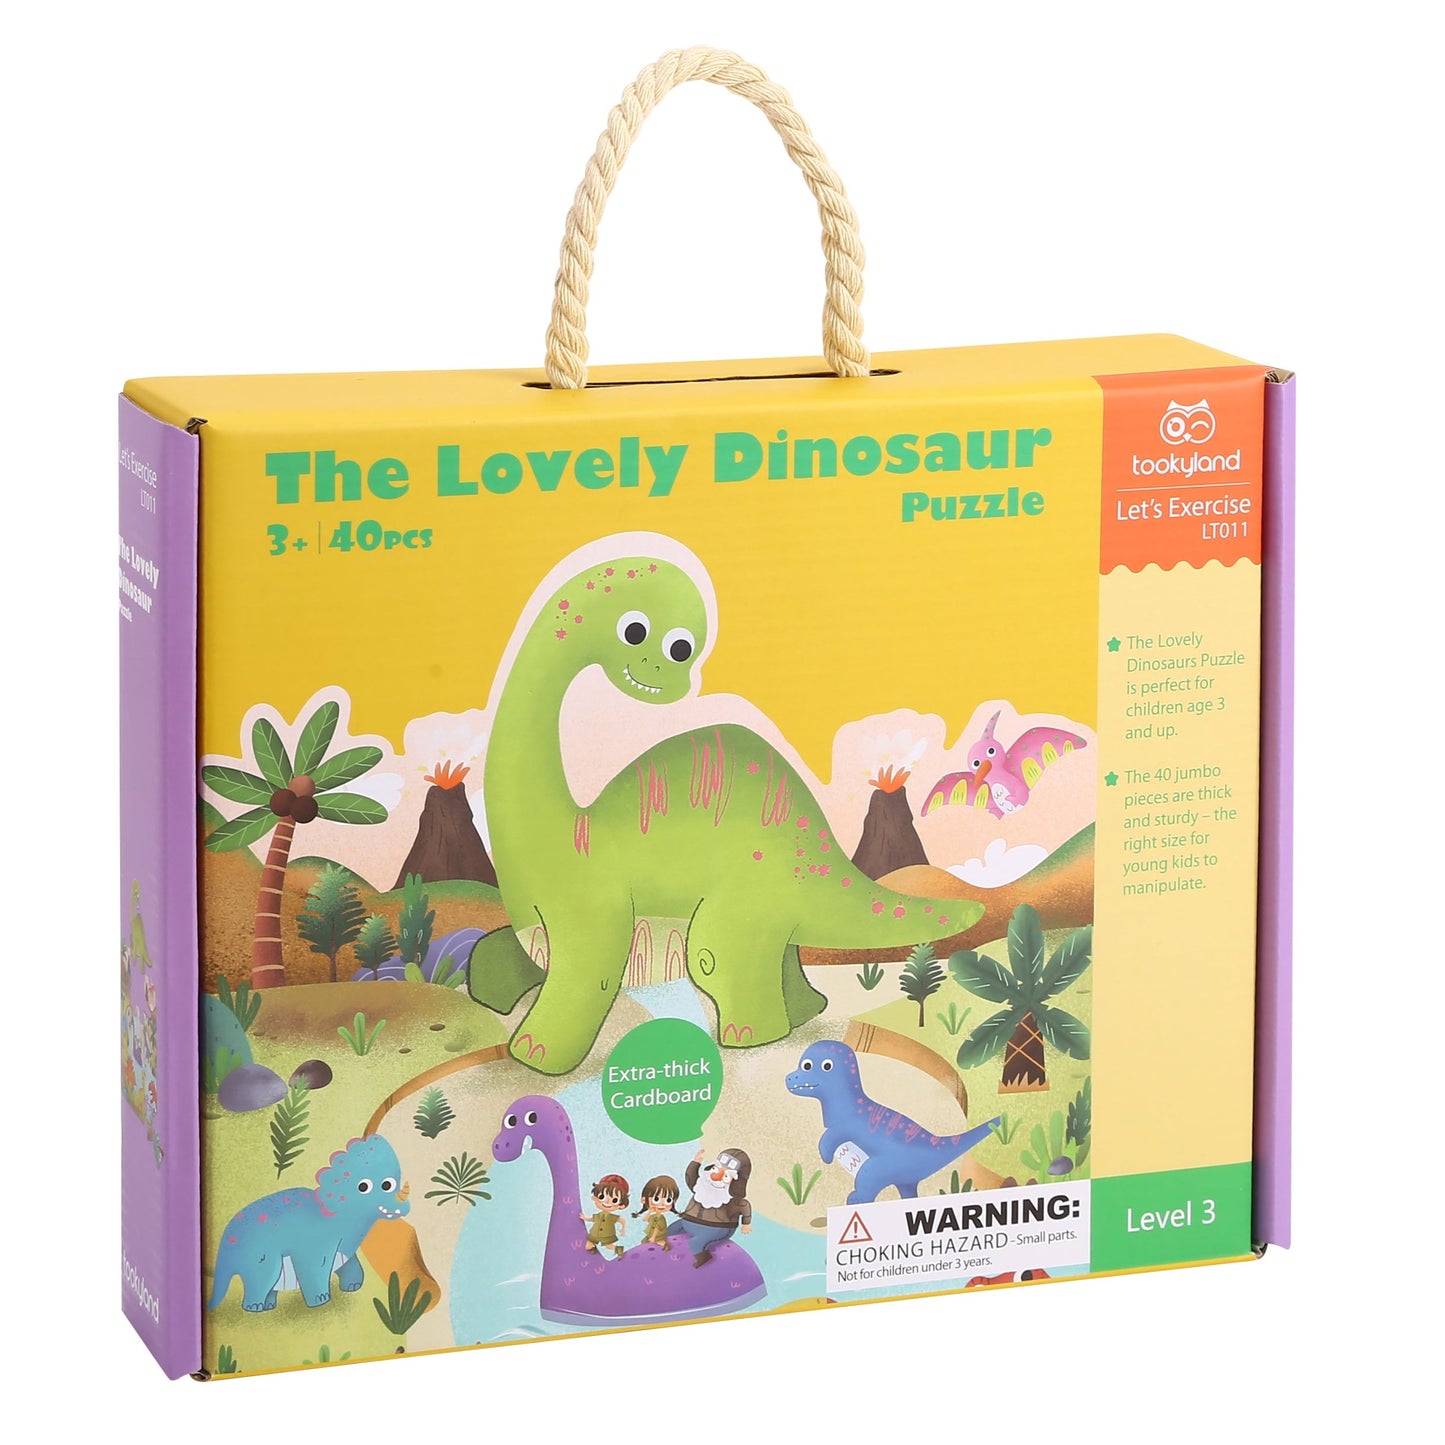 Tookyland The Lovely Dinosaur Puzzle box